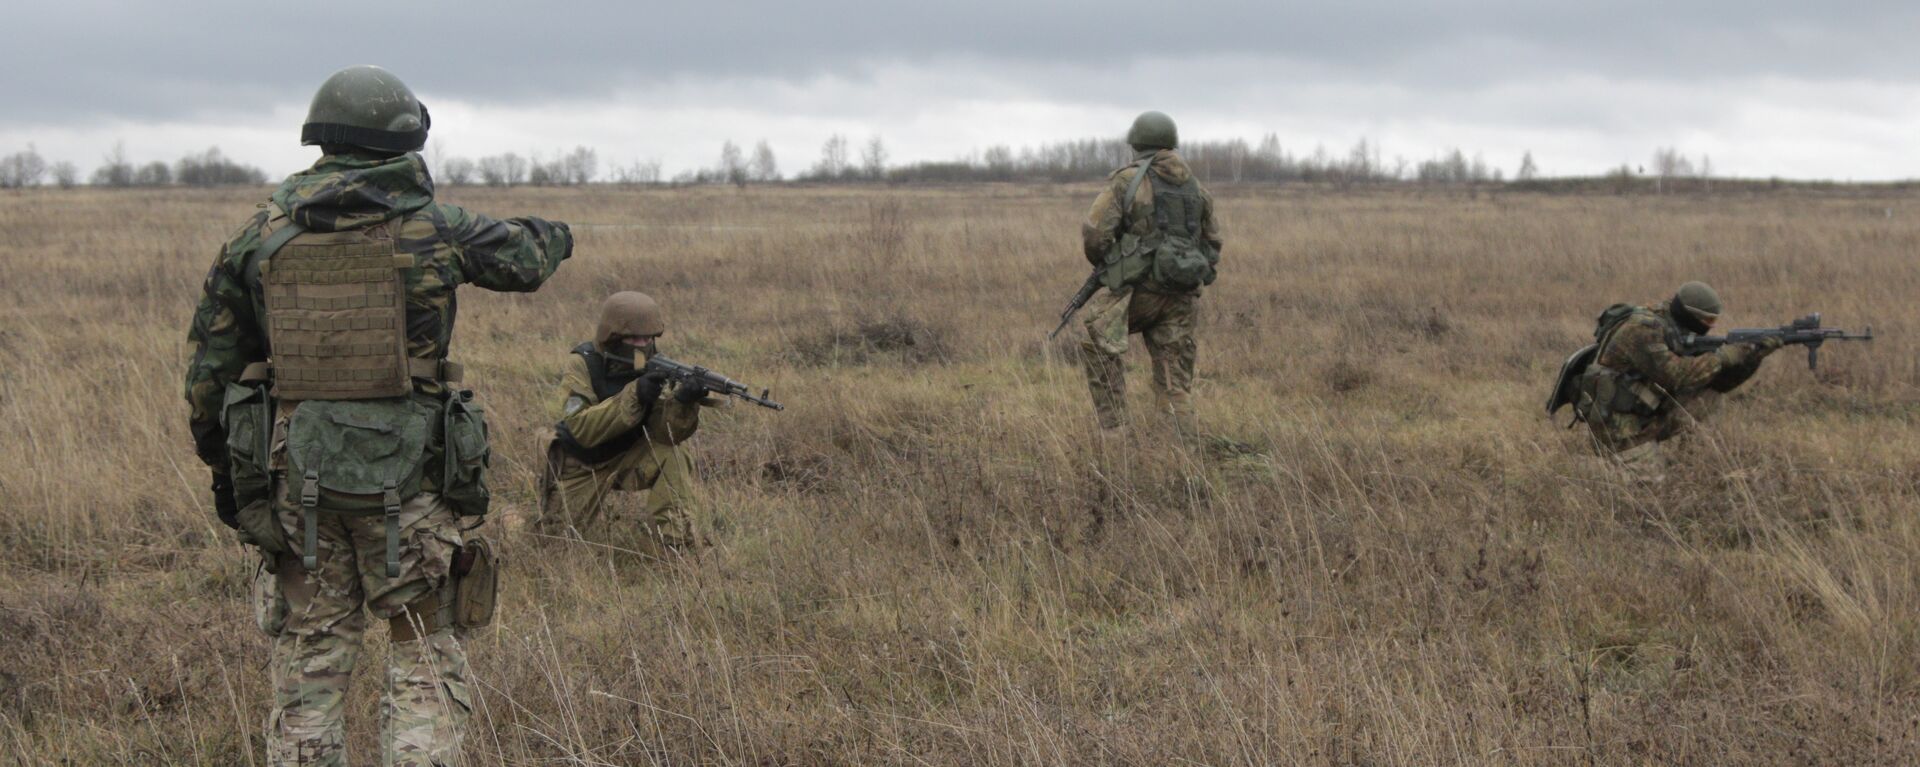  (File) US special forces instructor, left, trains Ukrainian soldiers at the military training ground in Ukraine's Khmelnitsk region Saturday, Nov. 21, 2015 - Sputnik International, 1920, 16.01.2023